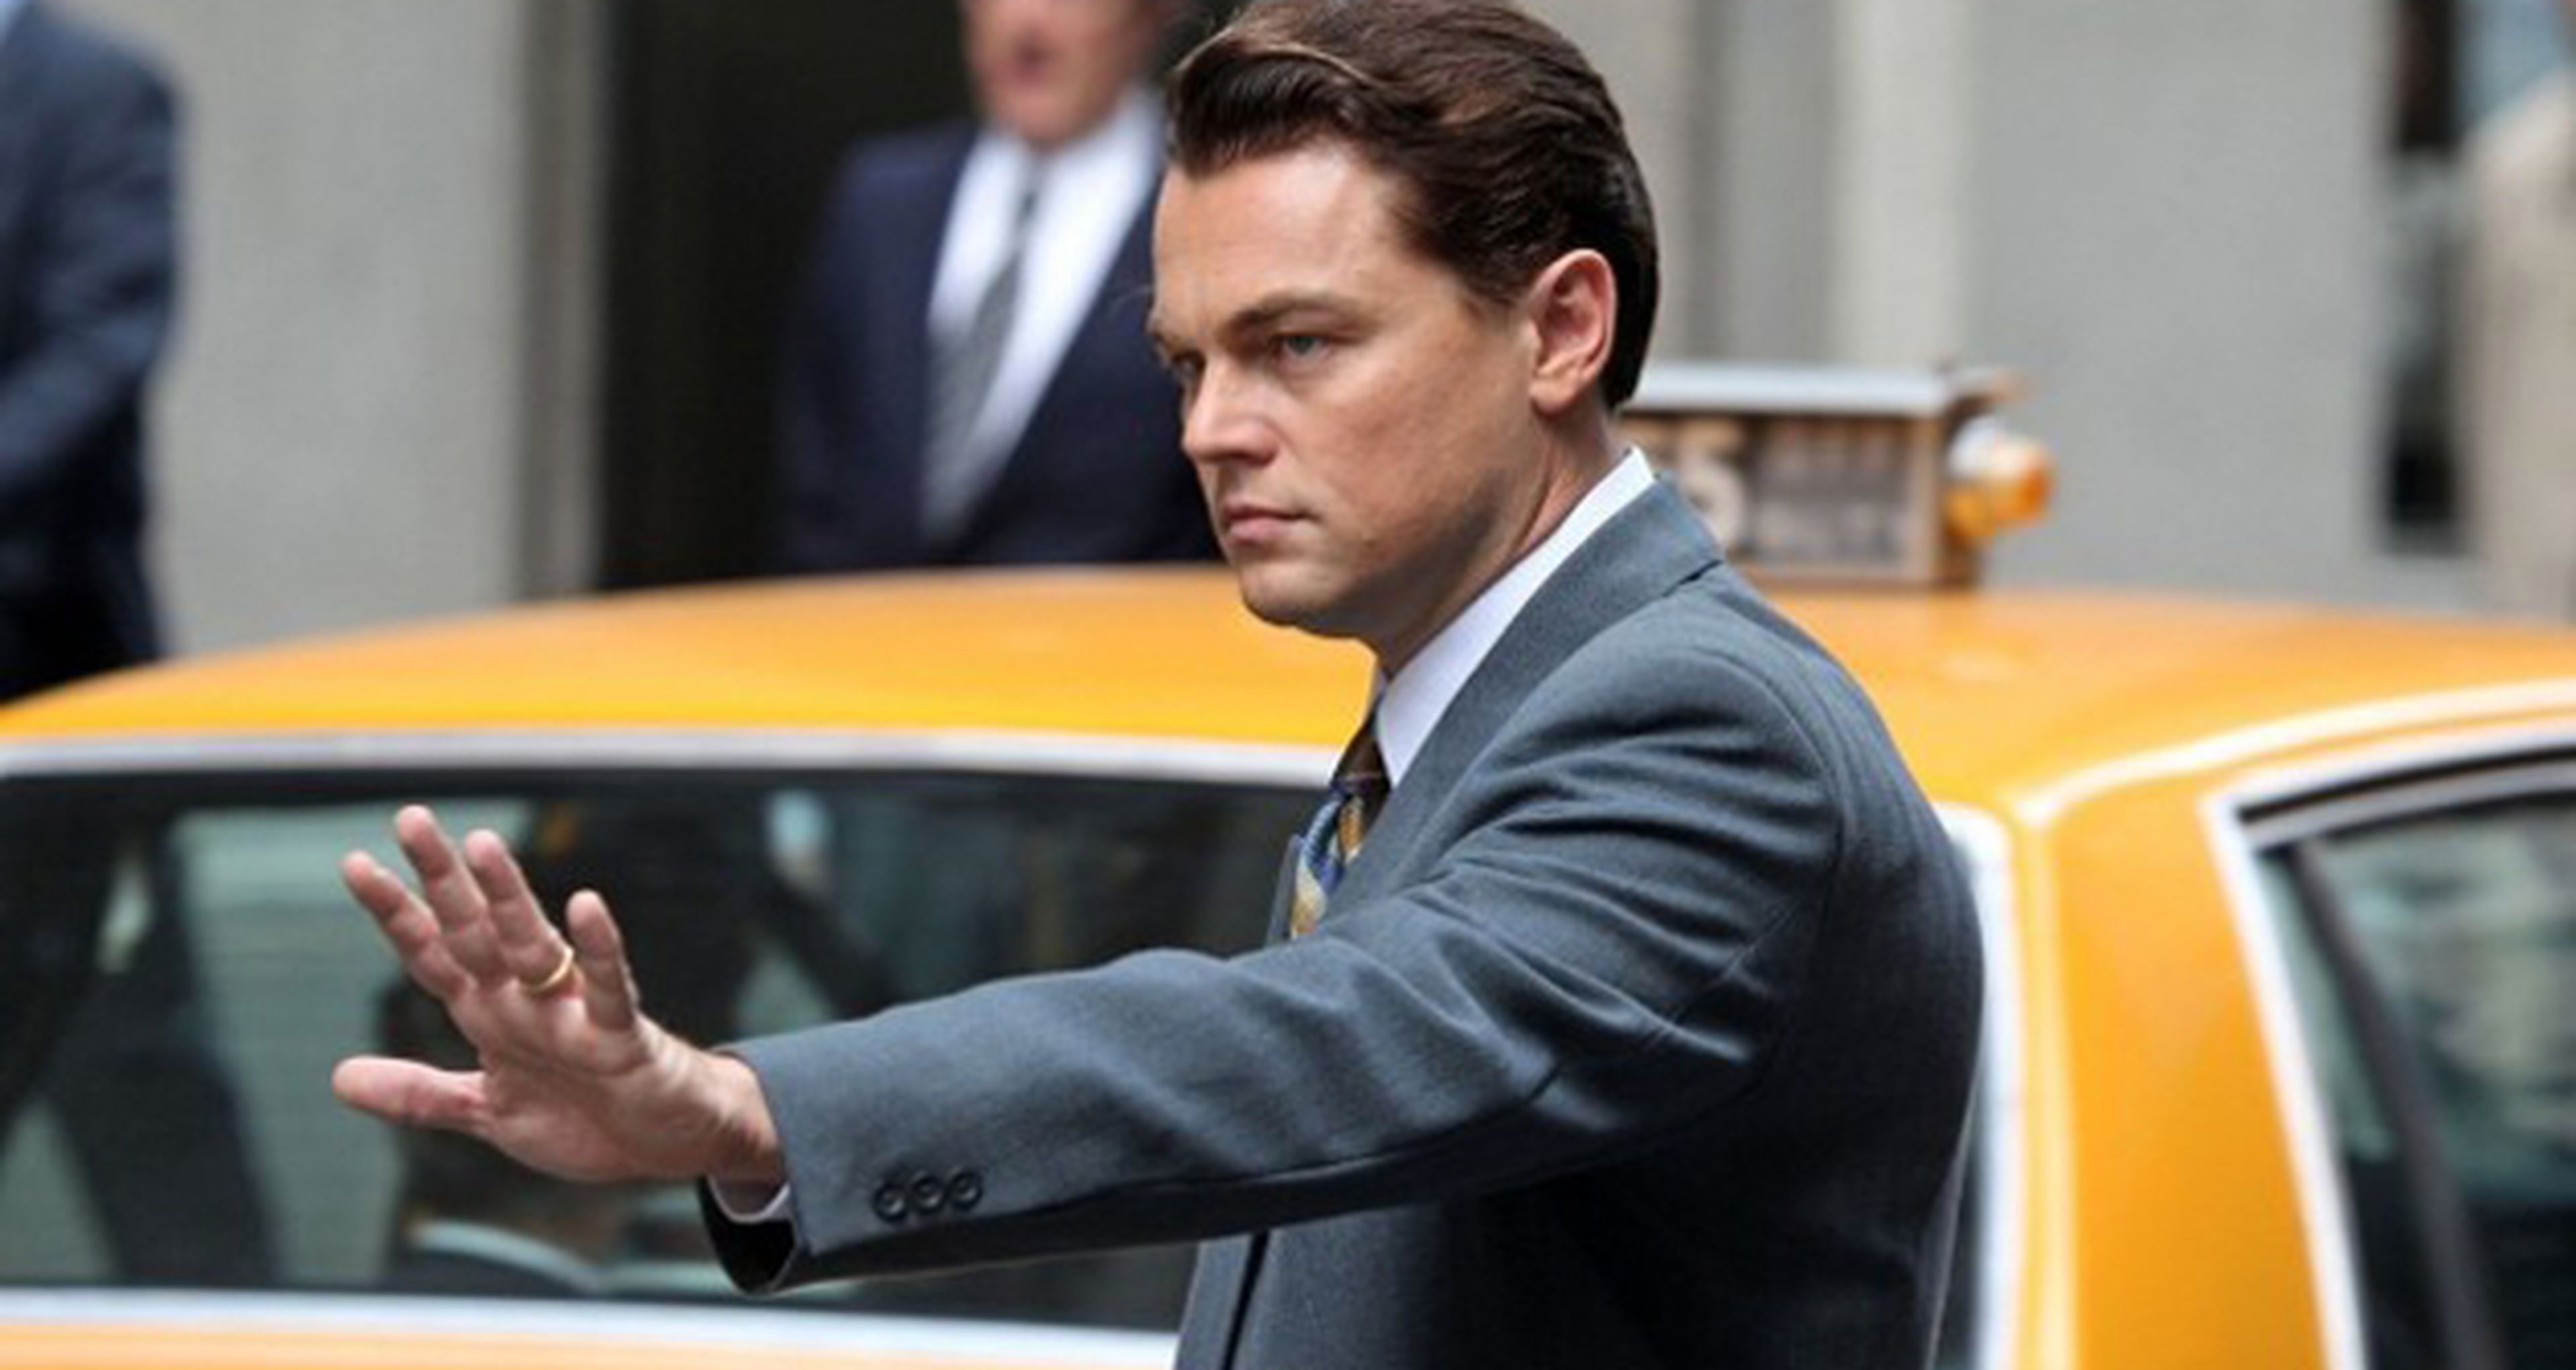 Tráiler de The Wolf of Wall Street con Leo DiCaprio